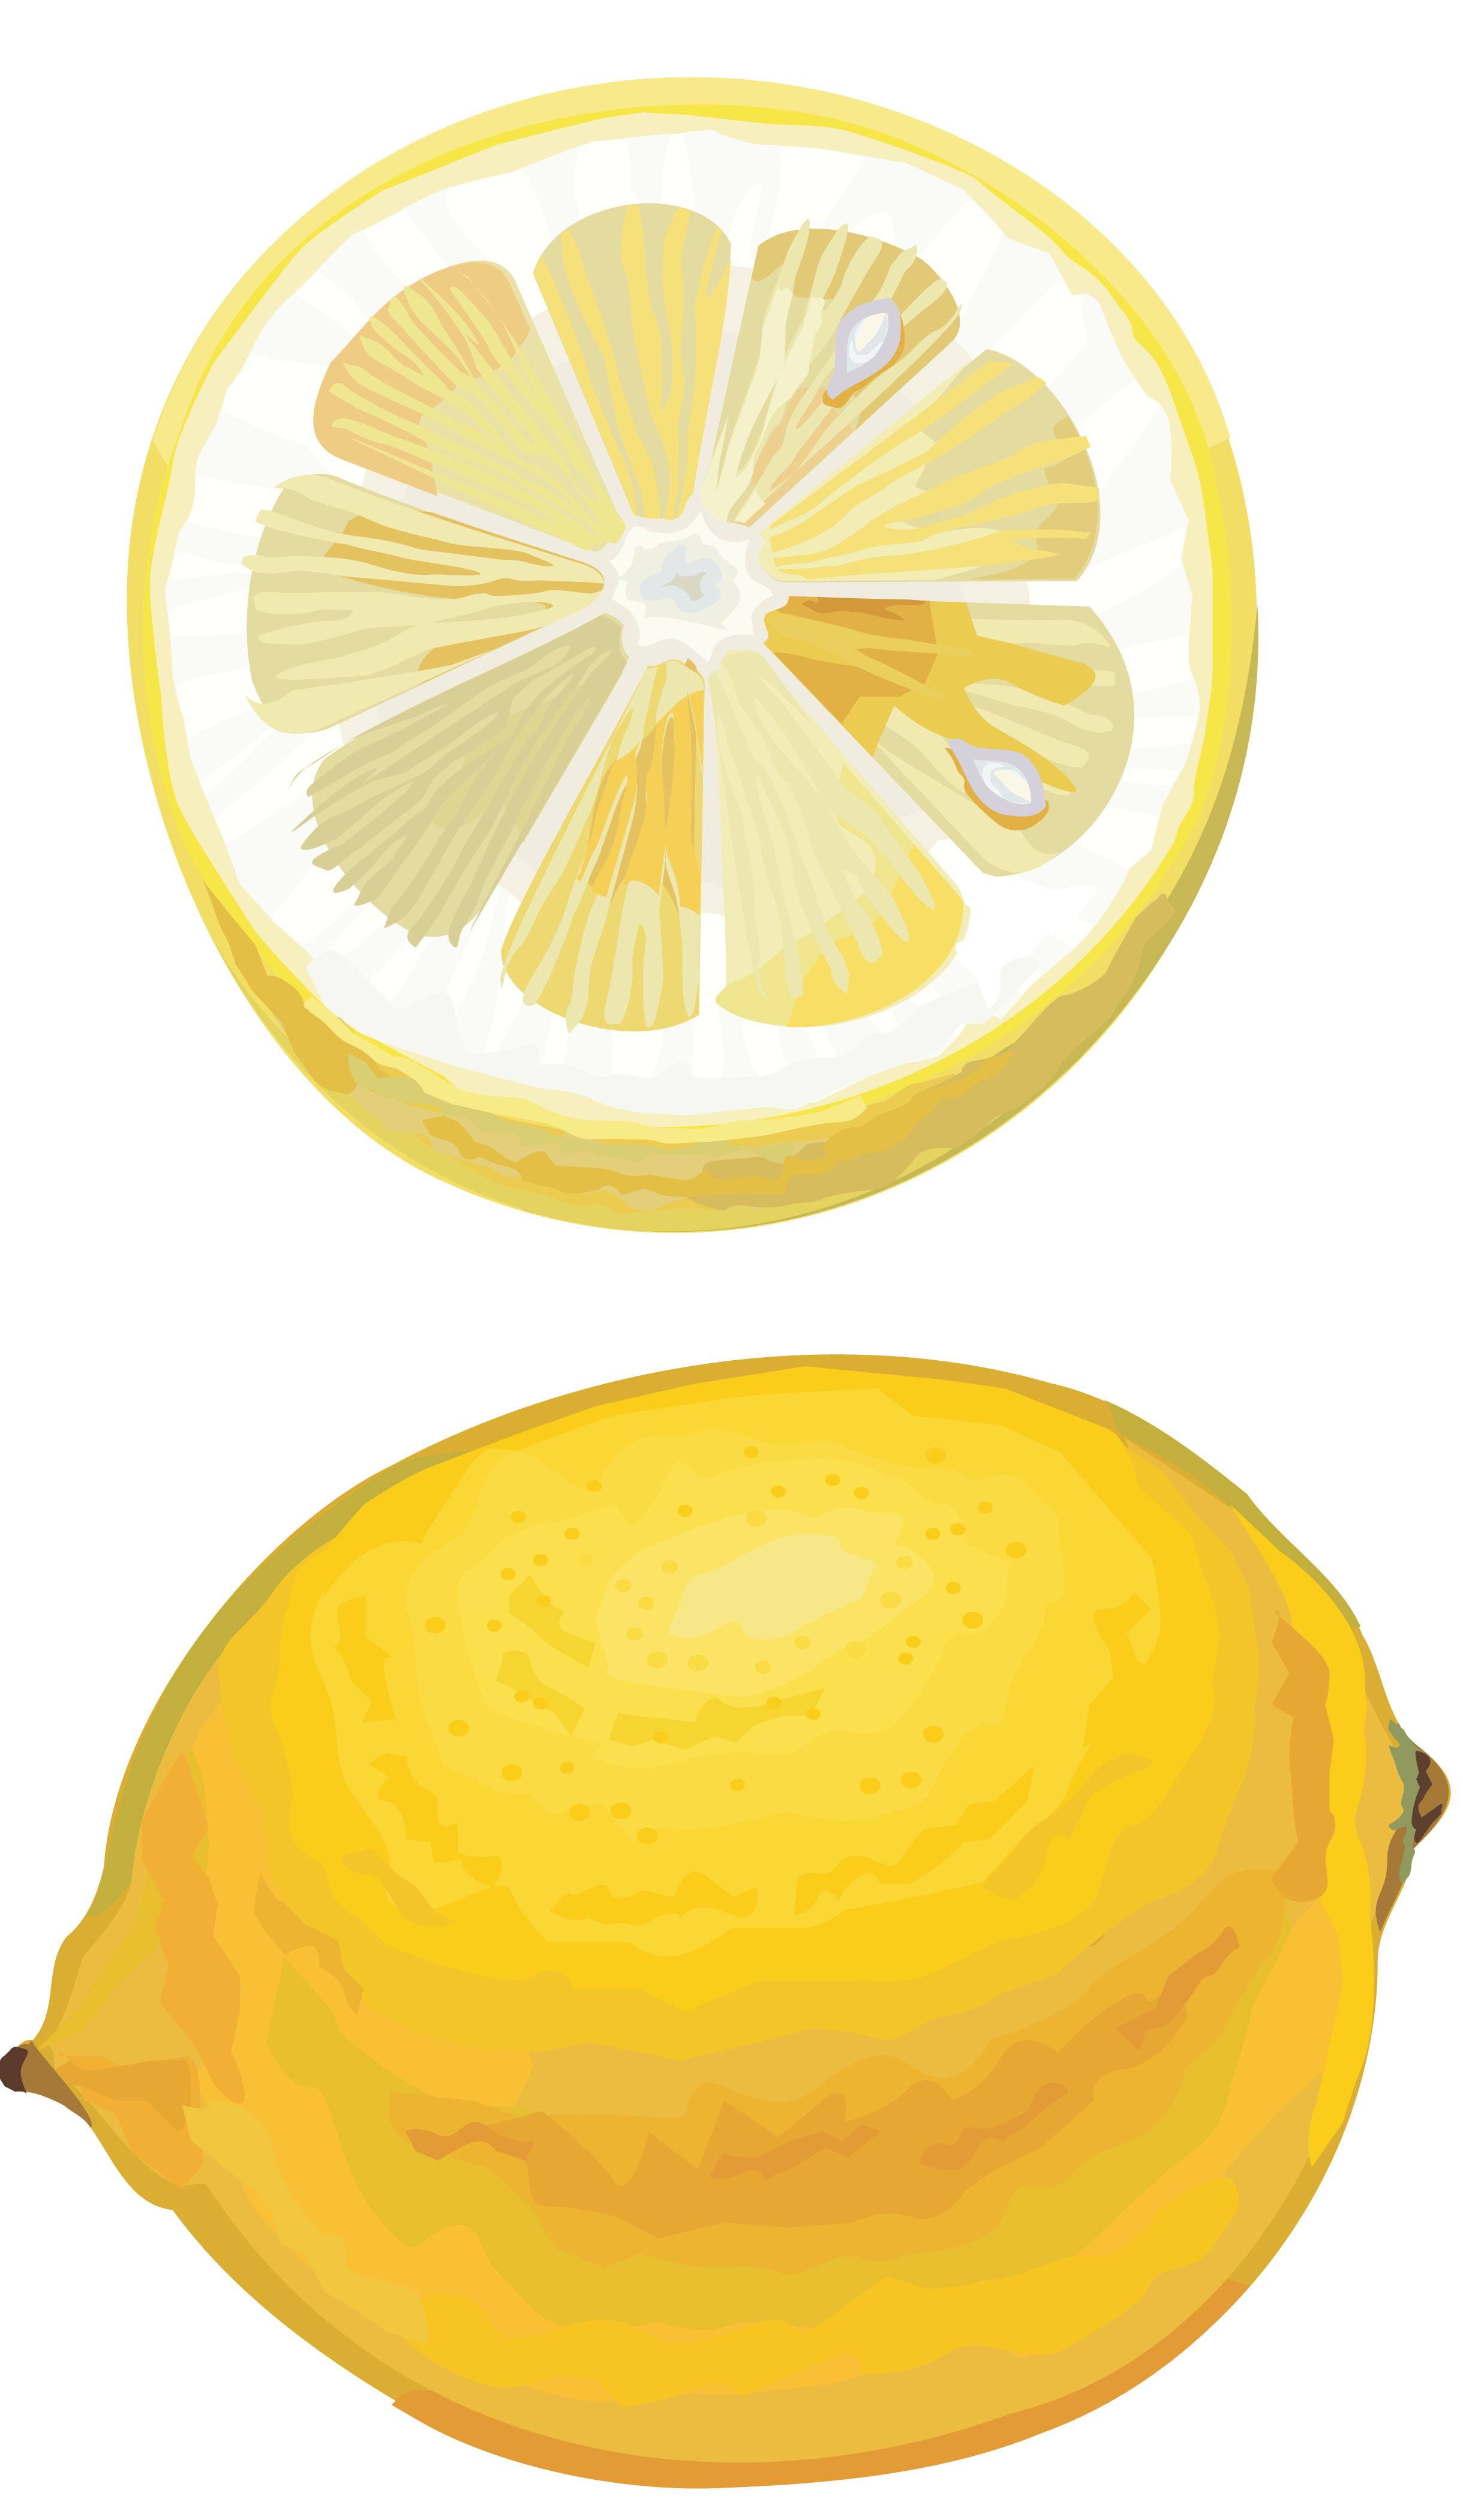 Lemon drawing cut PNG Image - PurePNG | Free transparent CC0 PNG Image